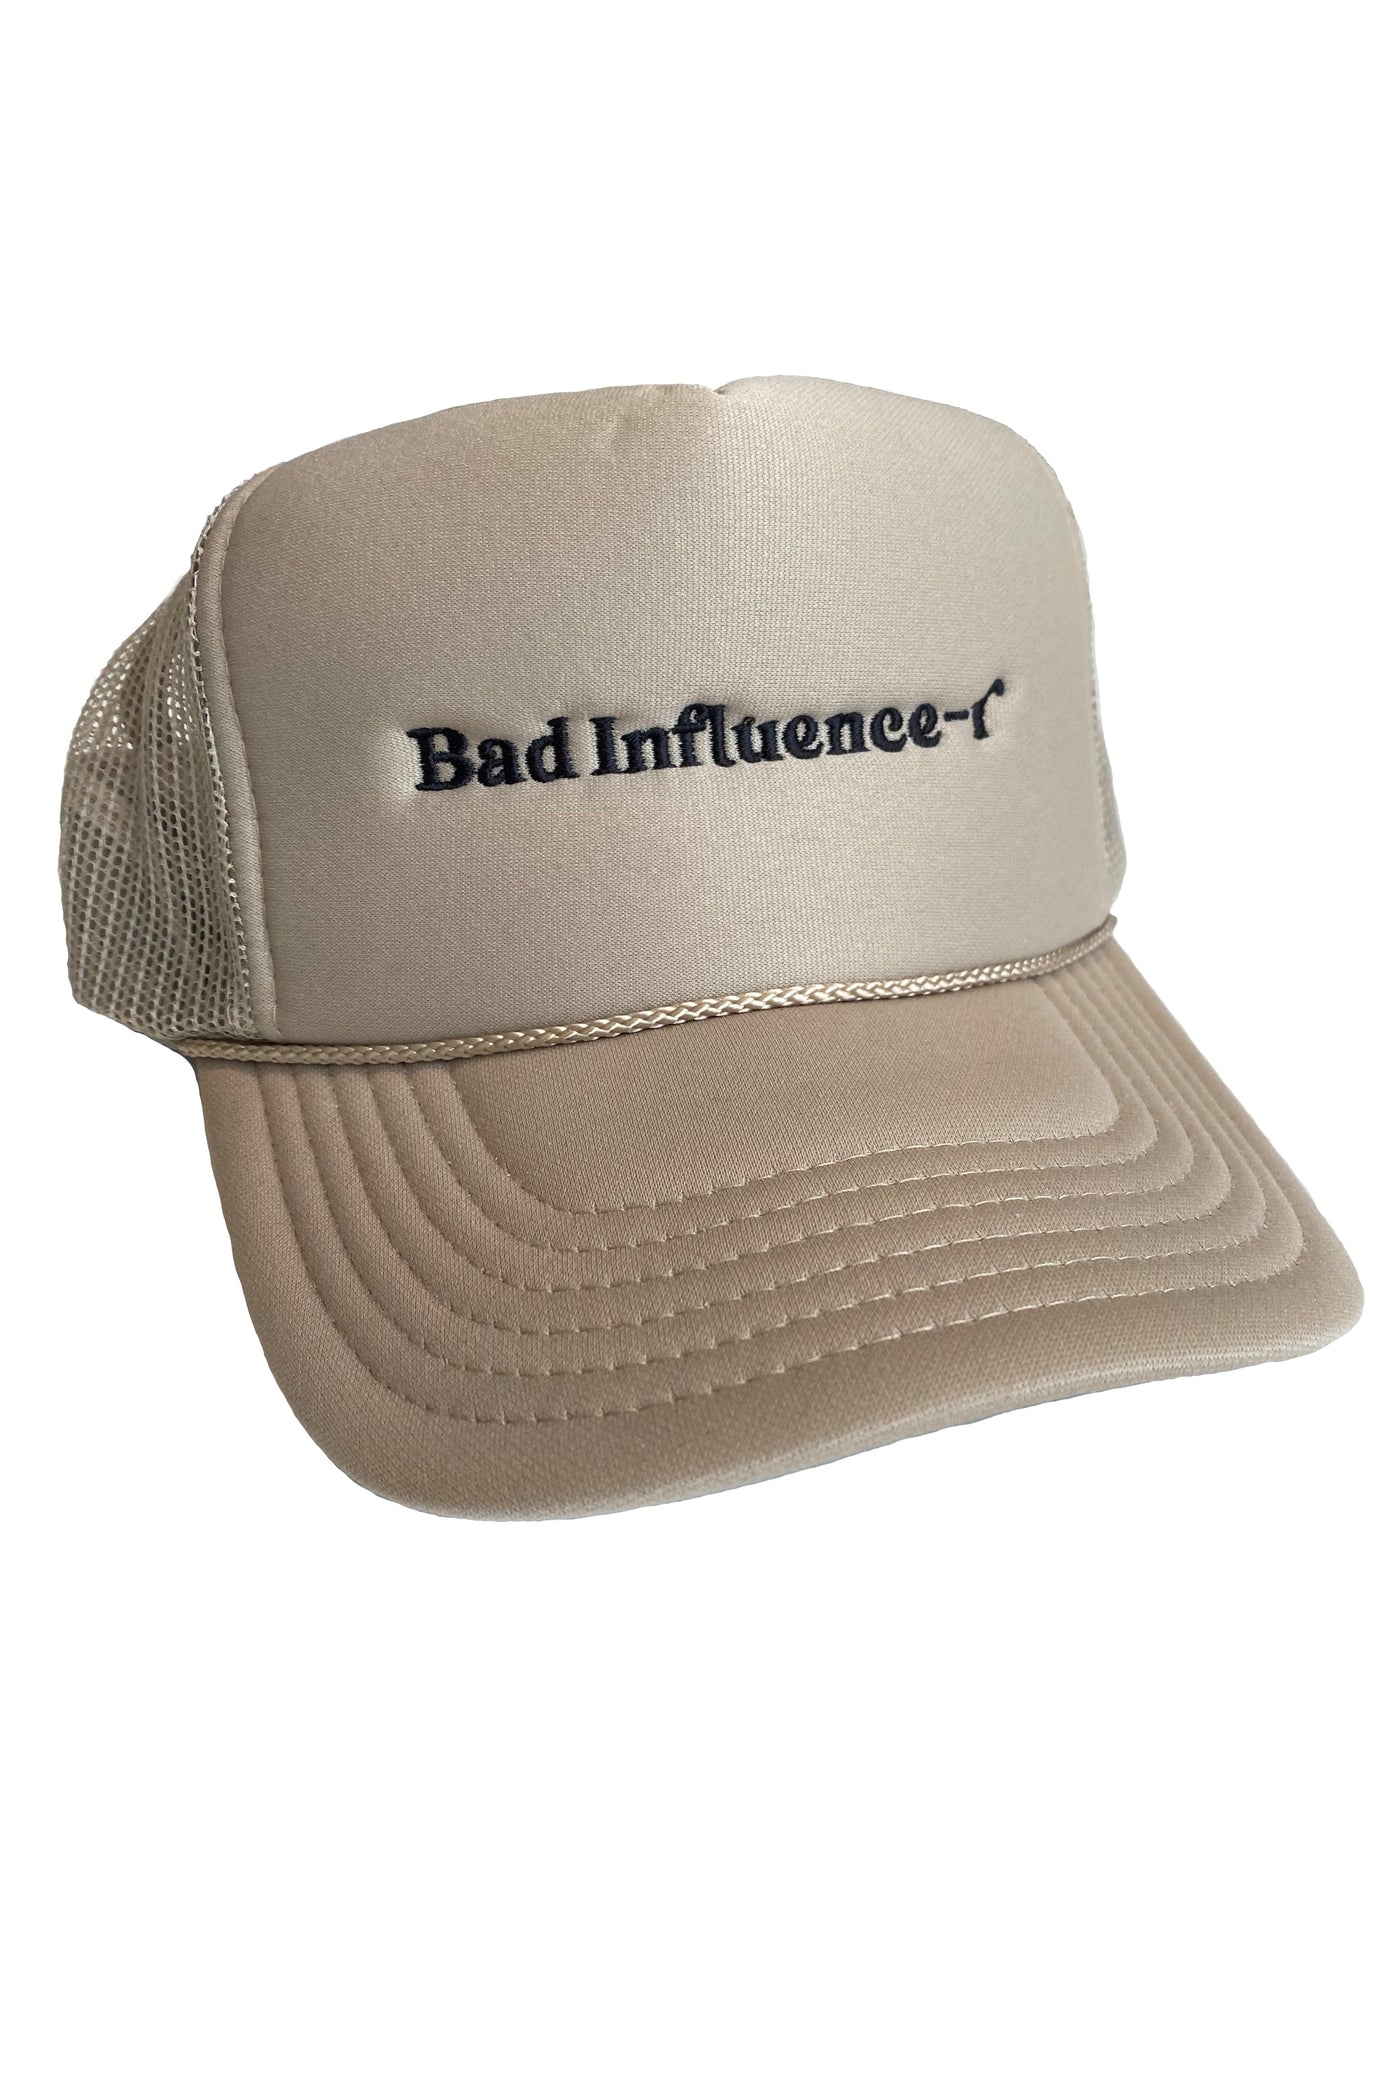 Bad Influence-r Trucker Hat